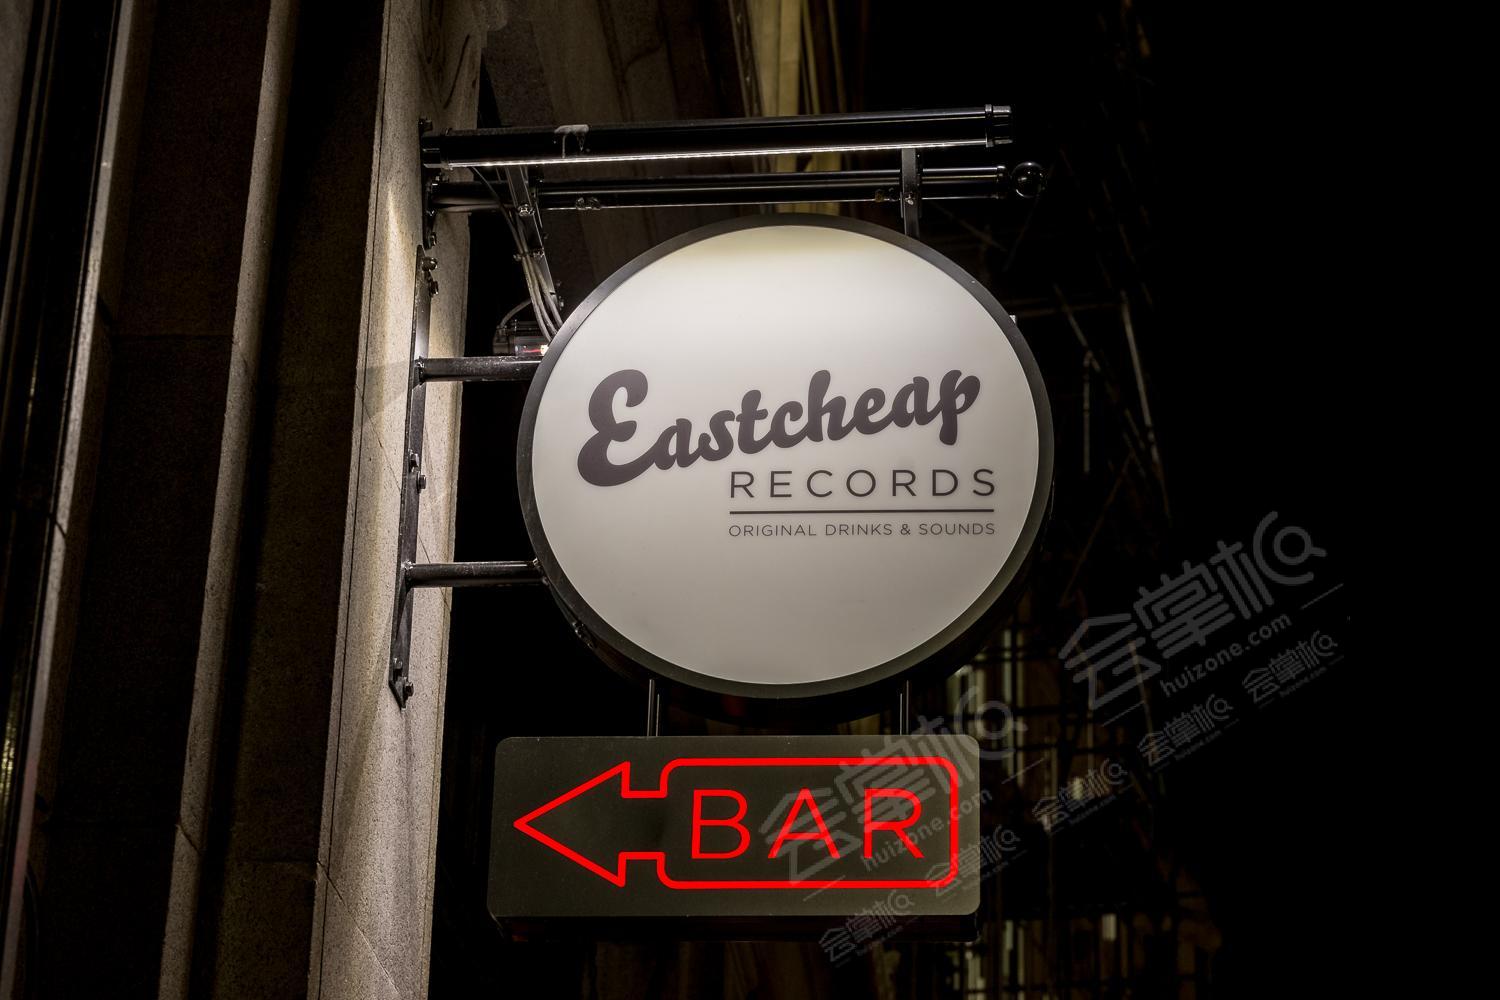 Eastcheap Records